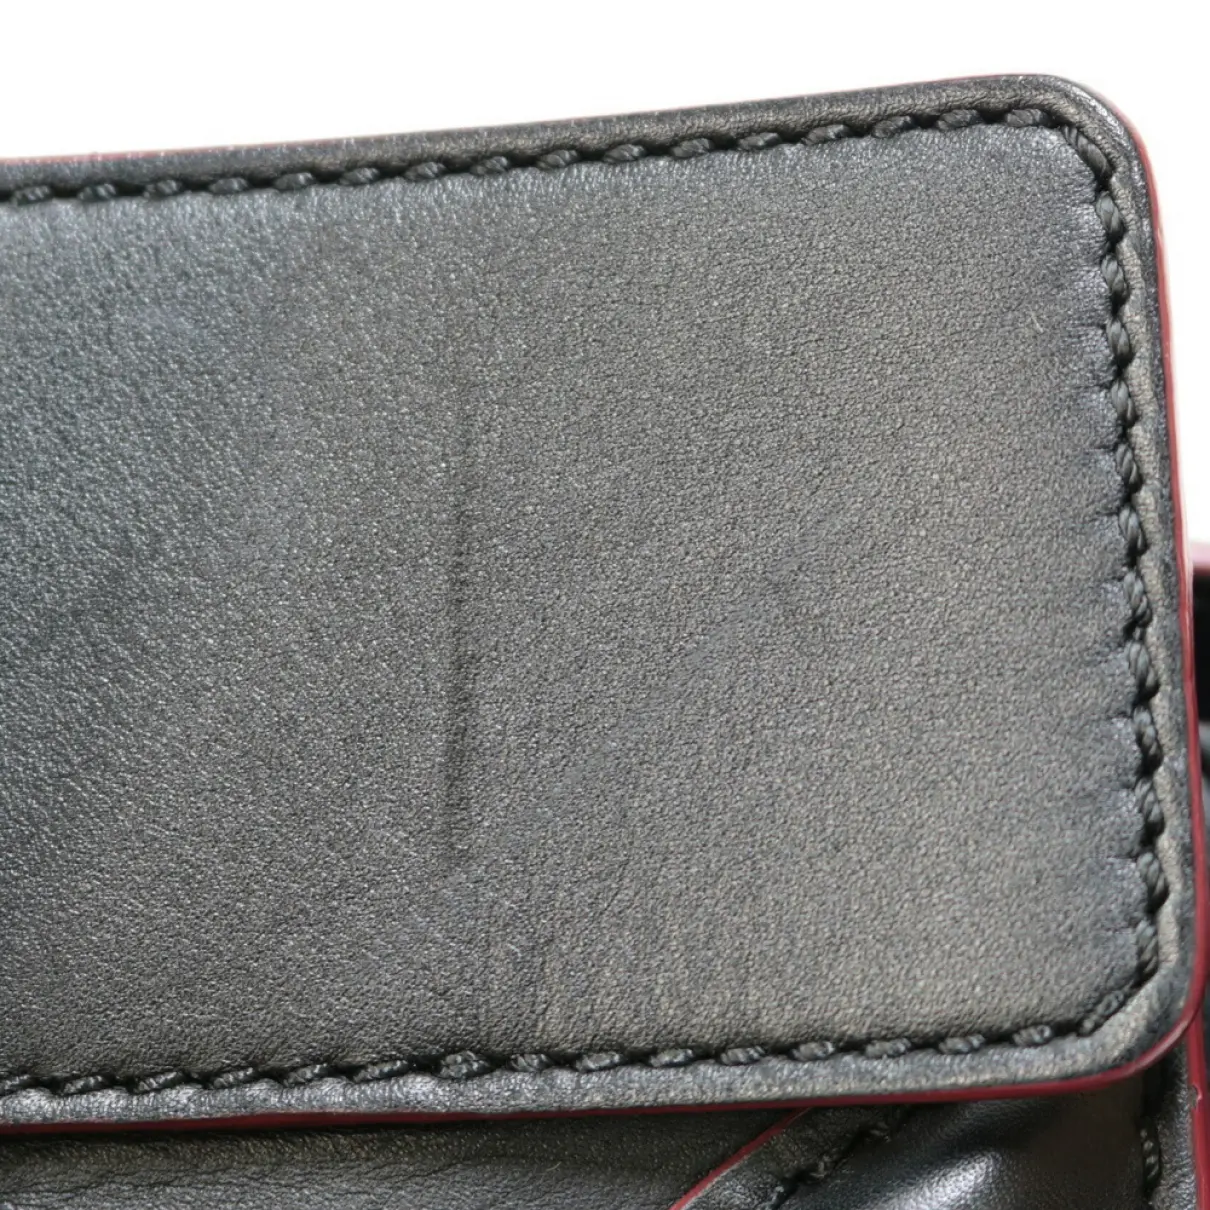 Buy Celine Luggage mini leather bag online